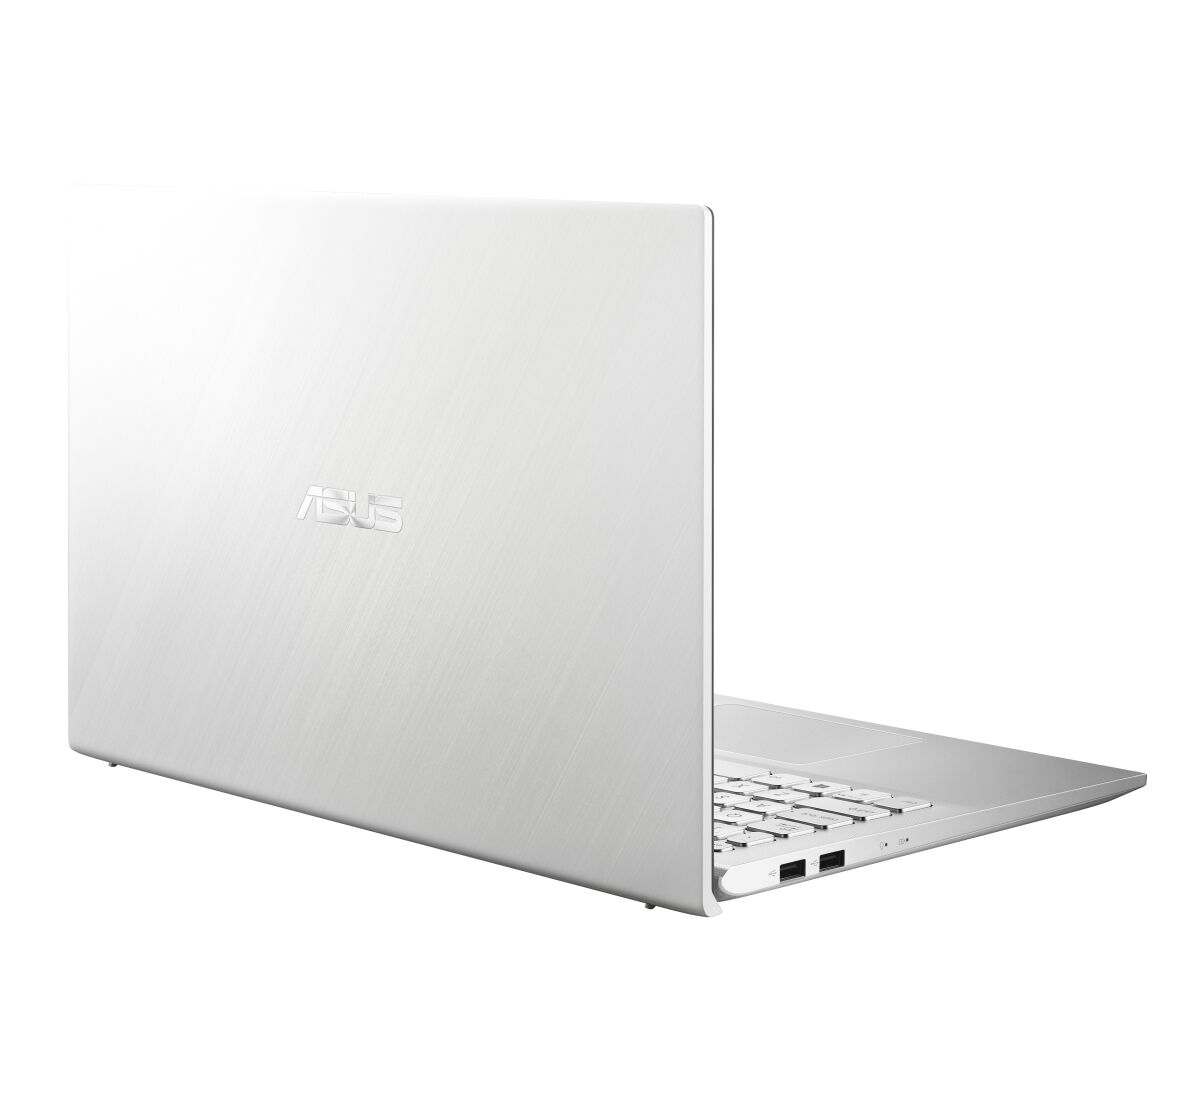 Asus Vivobook F512da Ej414t 90nb0lz2 M05590 Laptop Specifications